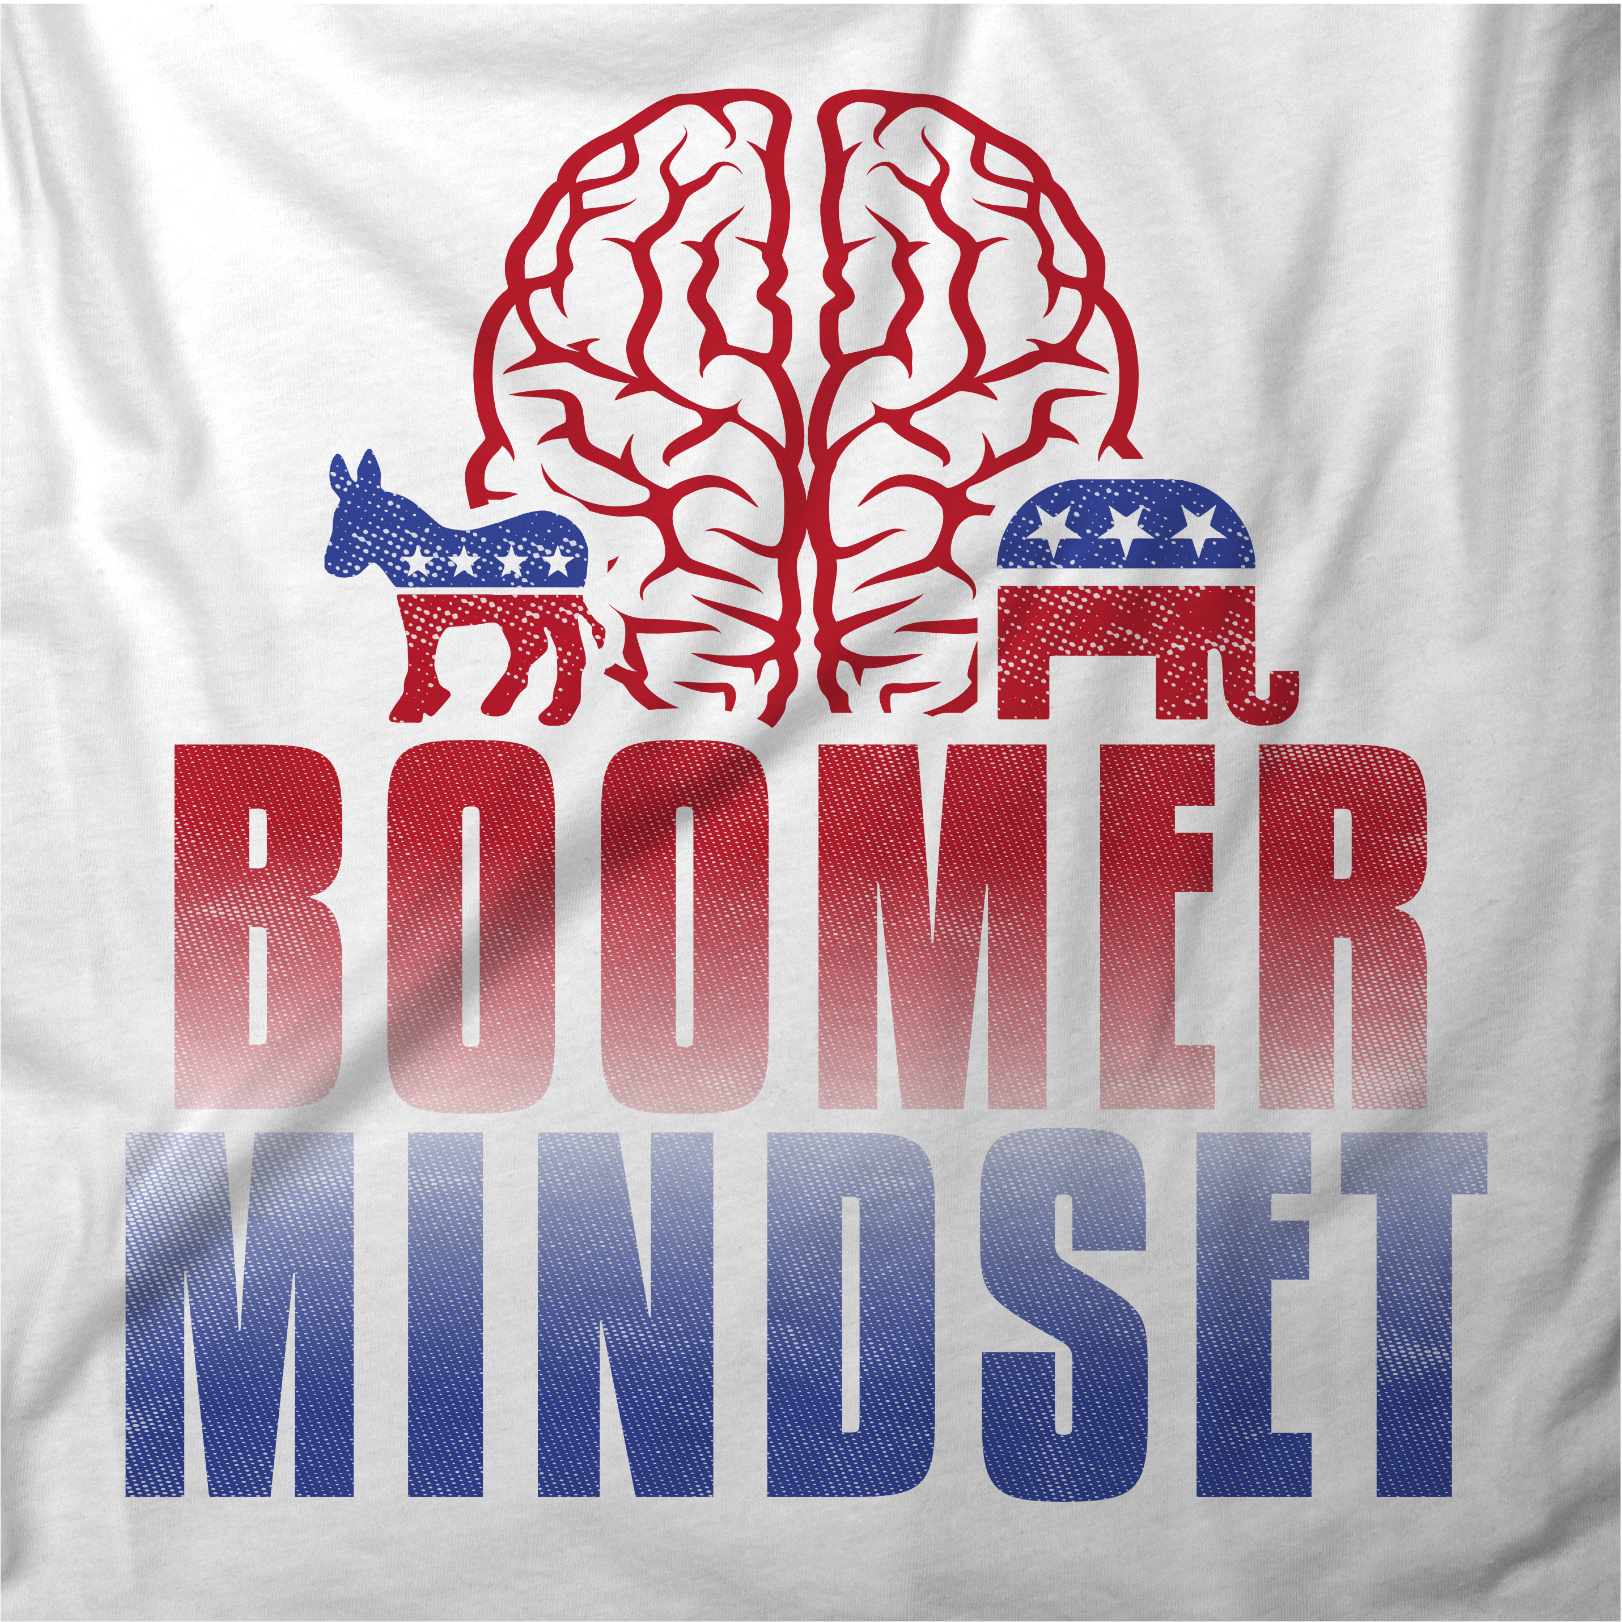 Boomer Mindset